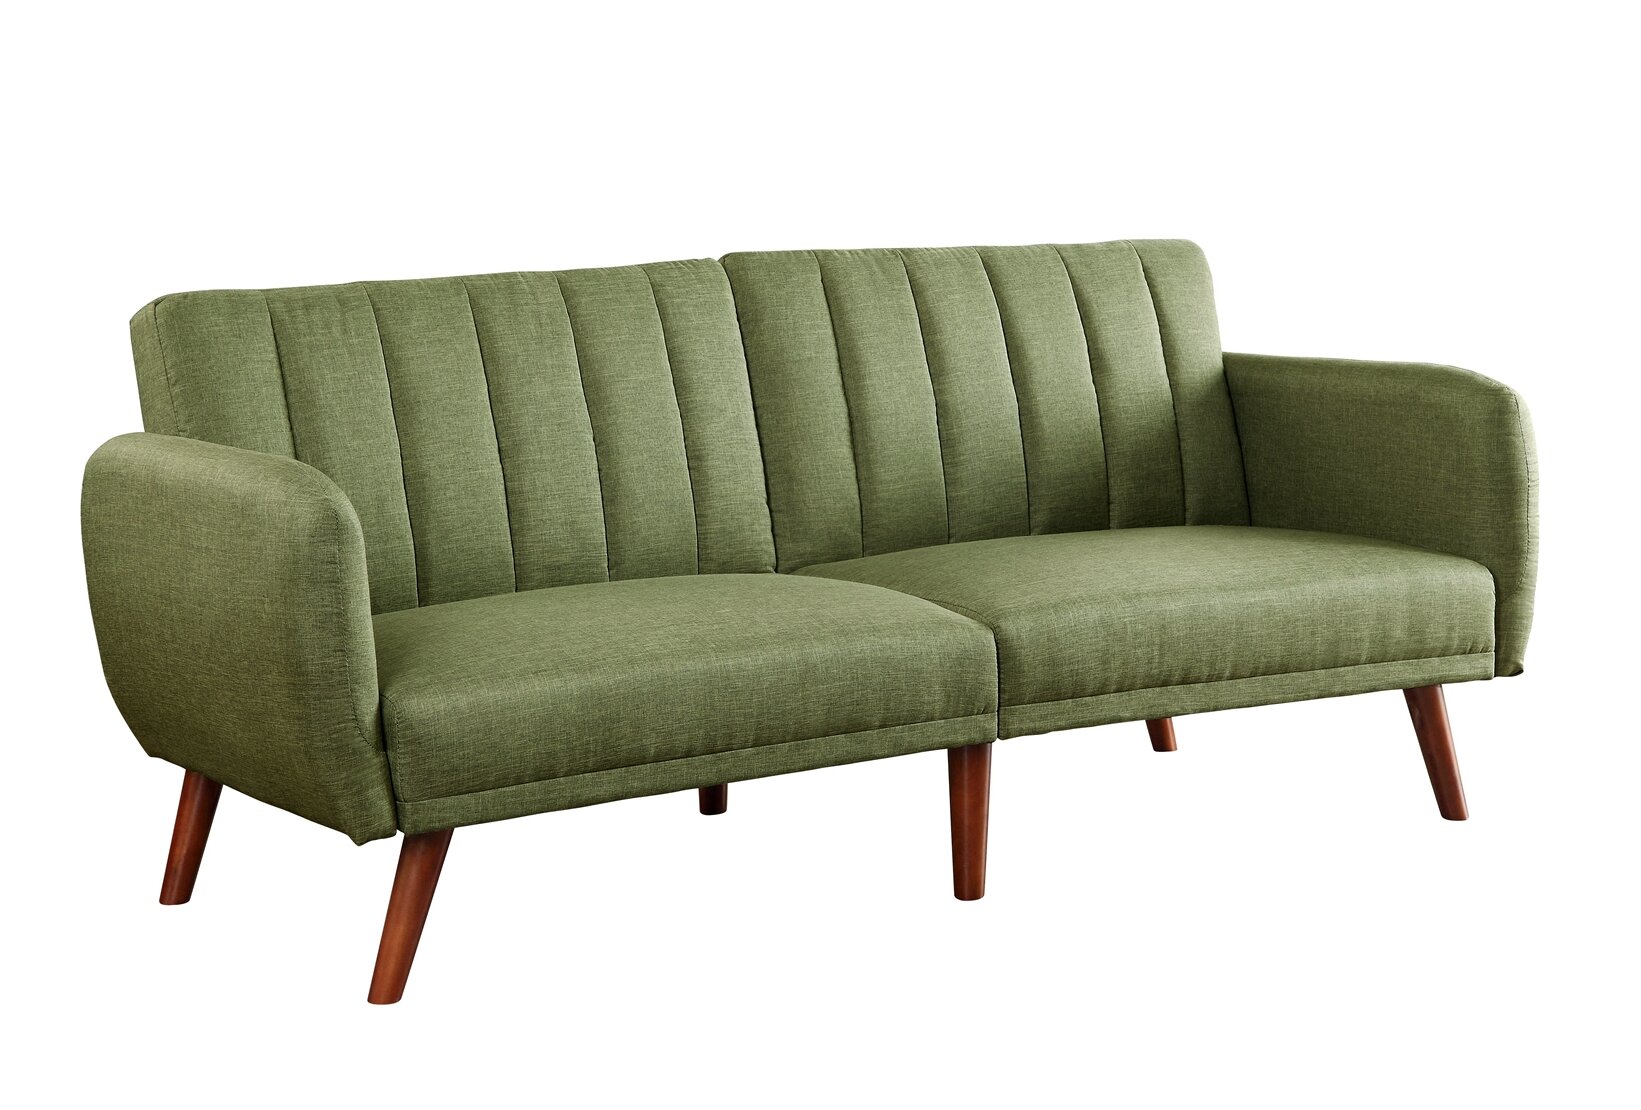 corrigan studio adjustable sofa bed